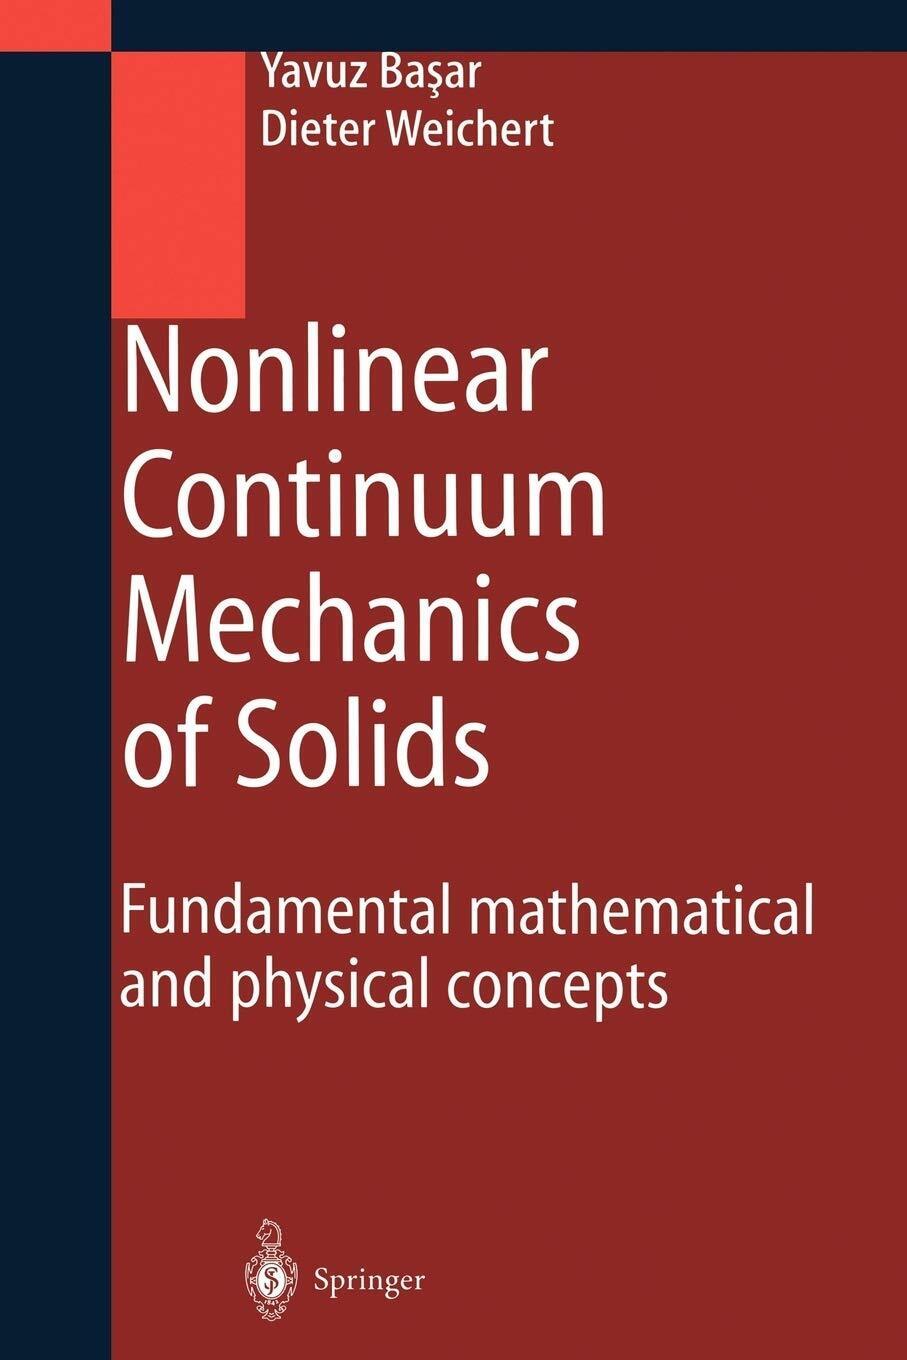 Nonlinear Continuum Mechanics of Solids -  Yavuz Basar, Dieter Weichert - 2010 libro usato